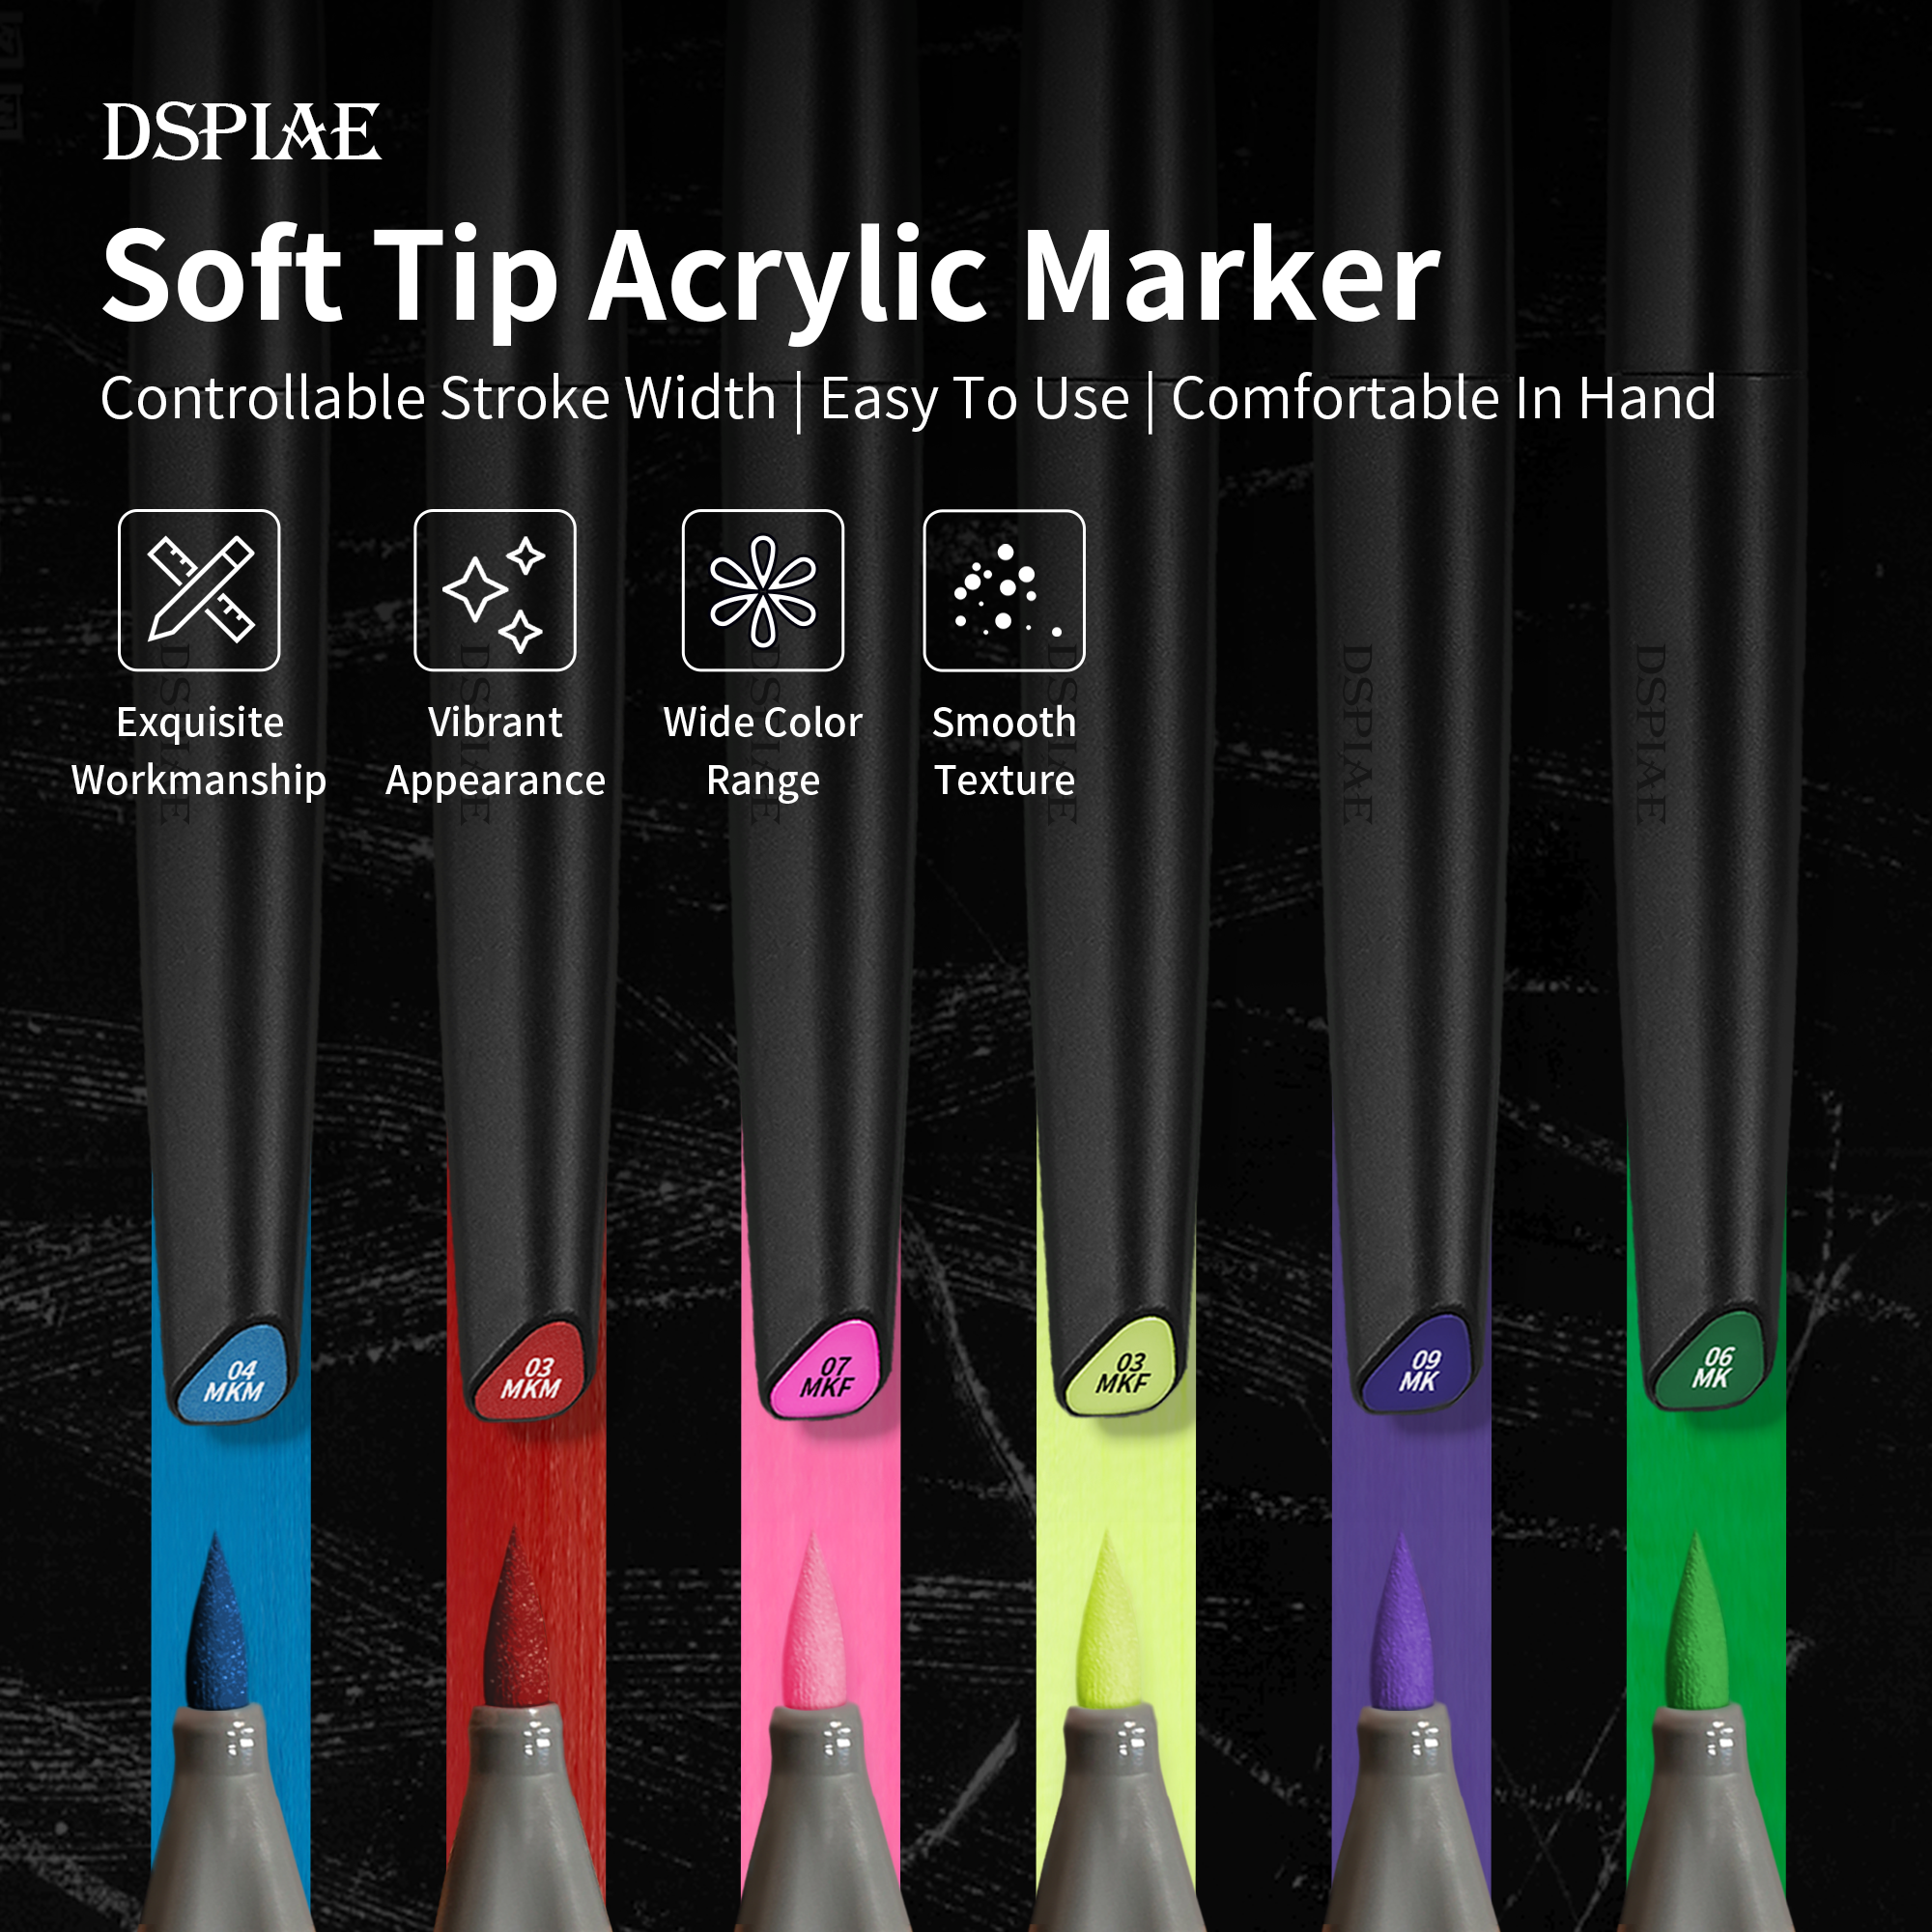 DSPIAE MK Soft Tip Acrylic Marker